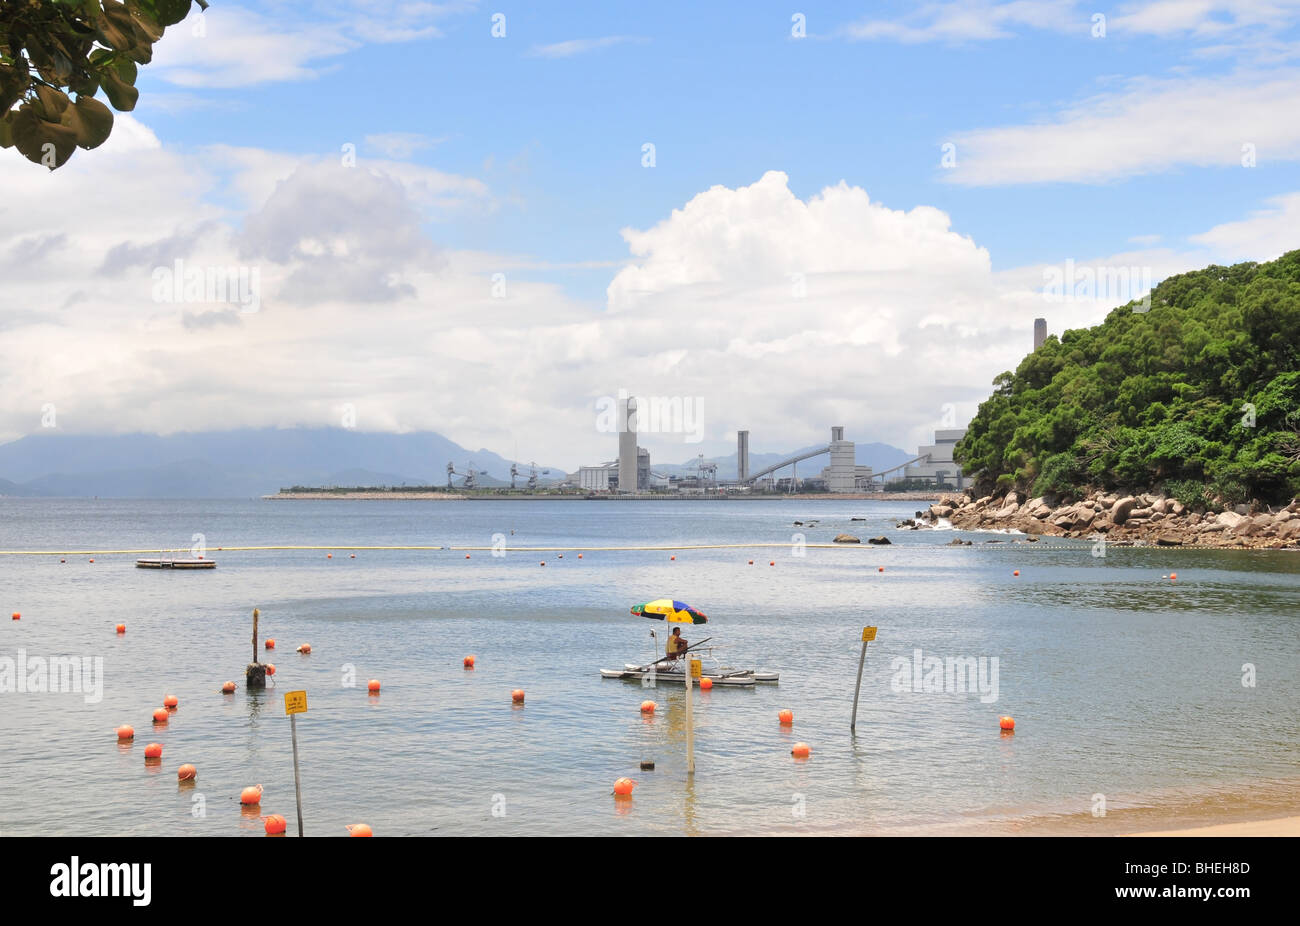 Lifeguard sitting on a floating platform, against a Lamma Power Station backdrop, Lo So Shing Beach, Lamma Island, Hong Kong Stock Photo